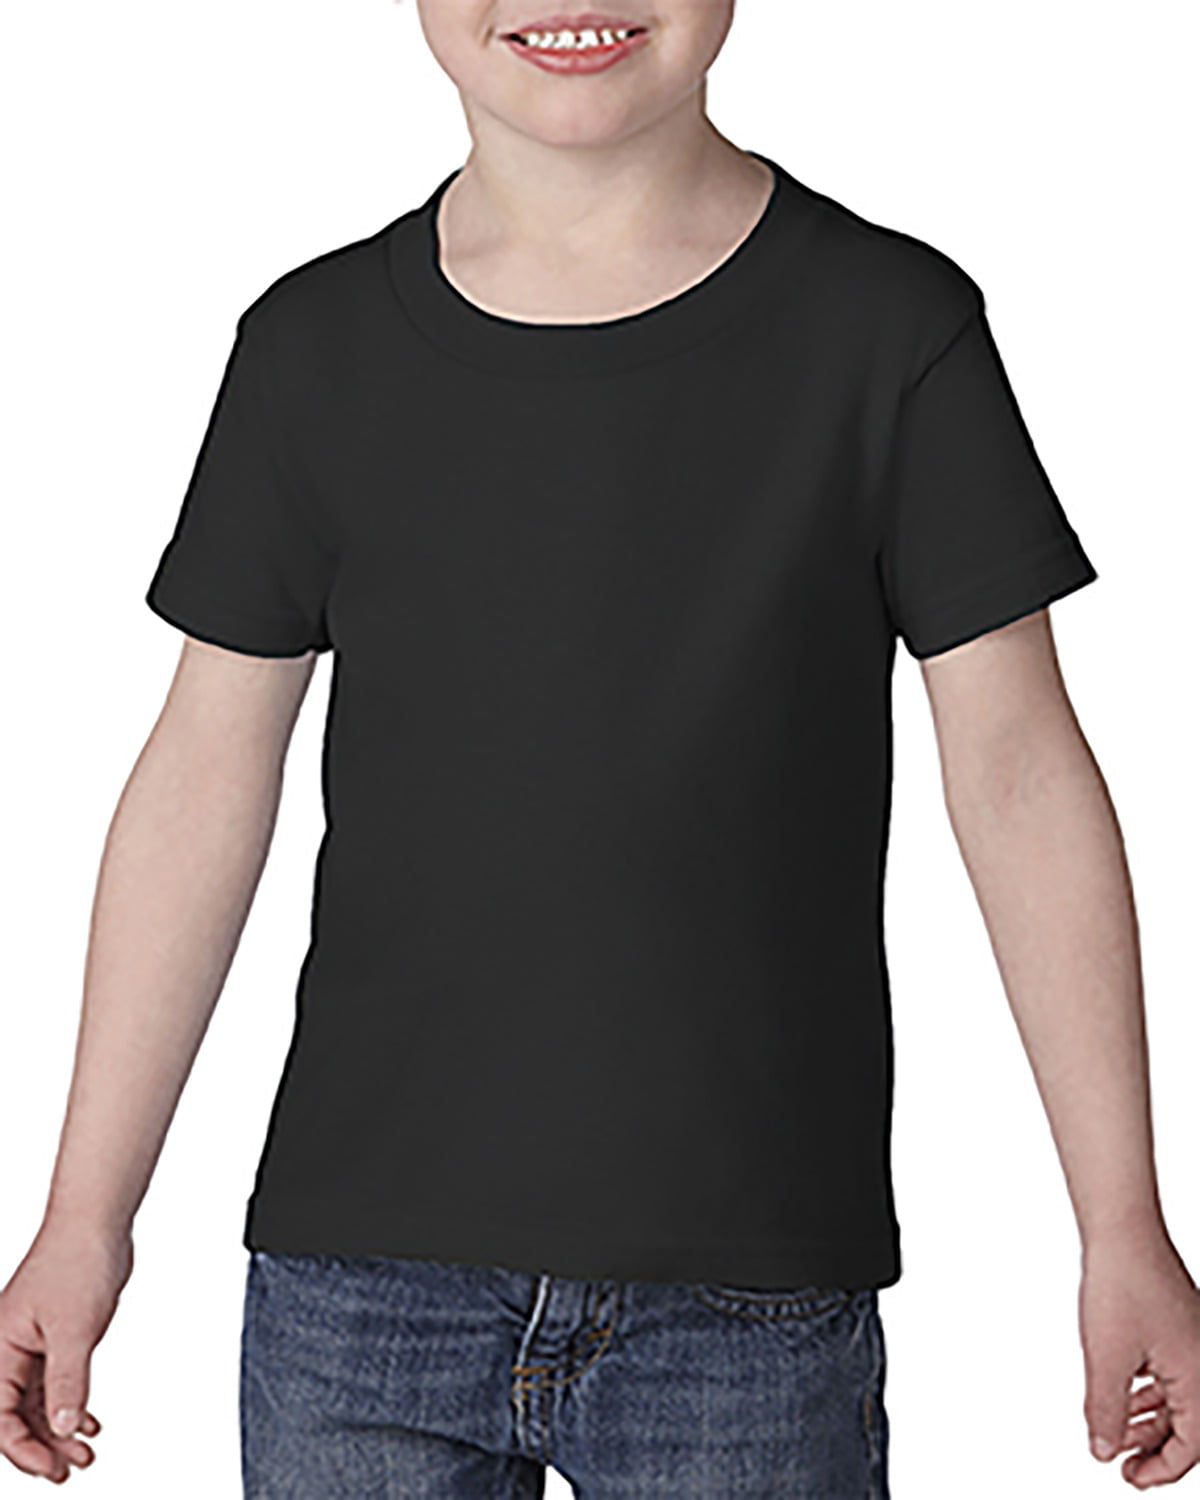 plain black t shirt for kids